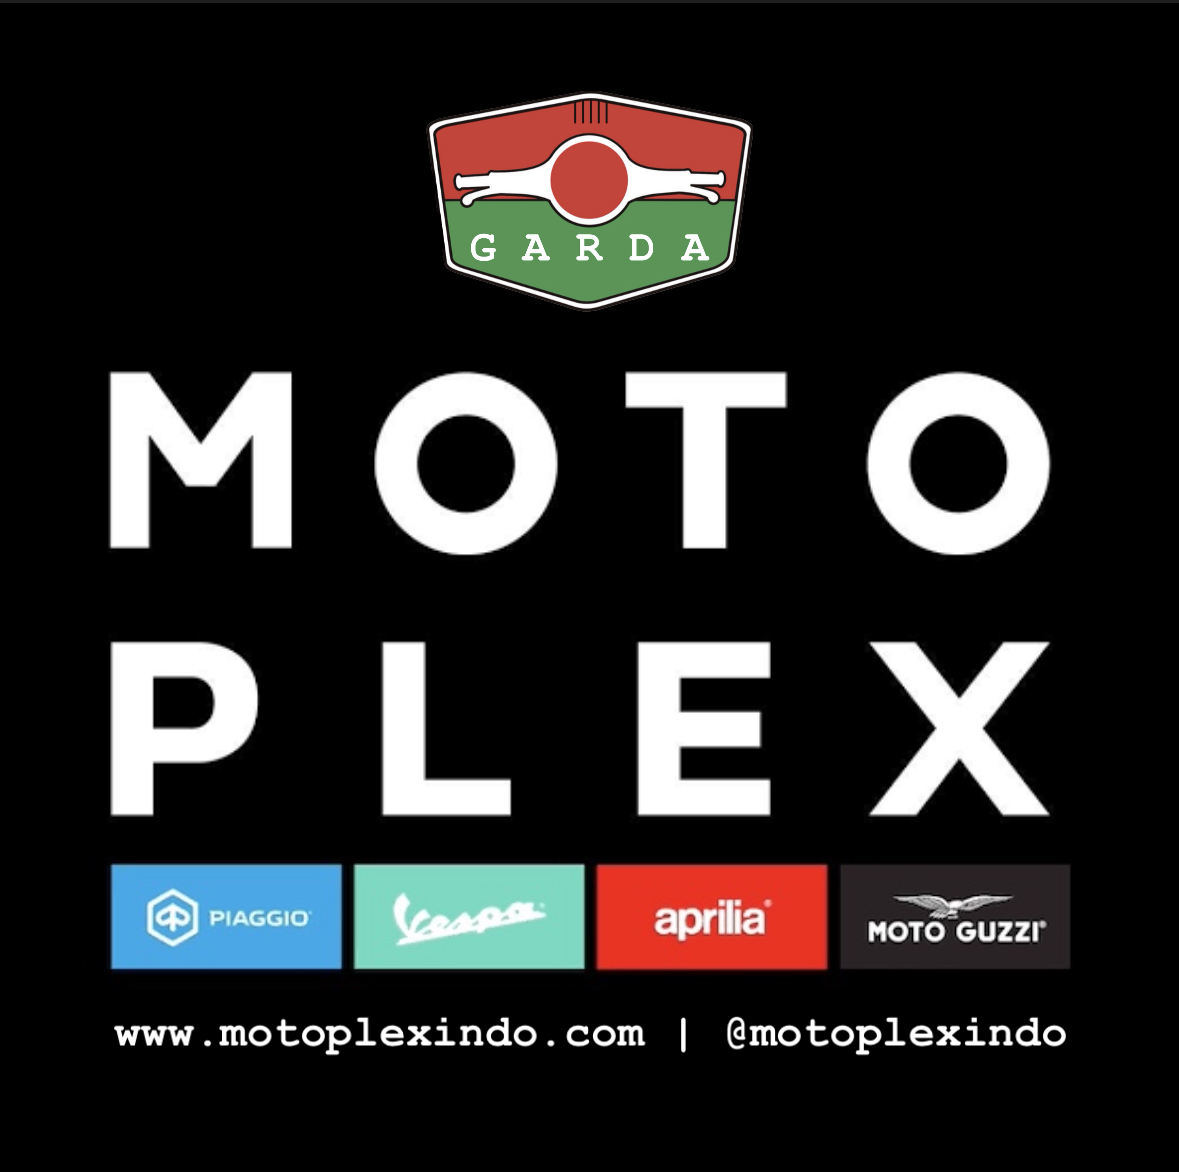 Motoplex: Piaggio Vespa Aprilia Moto Guzzi Medan